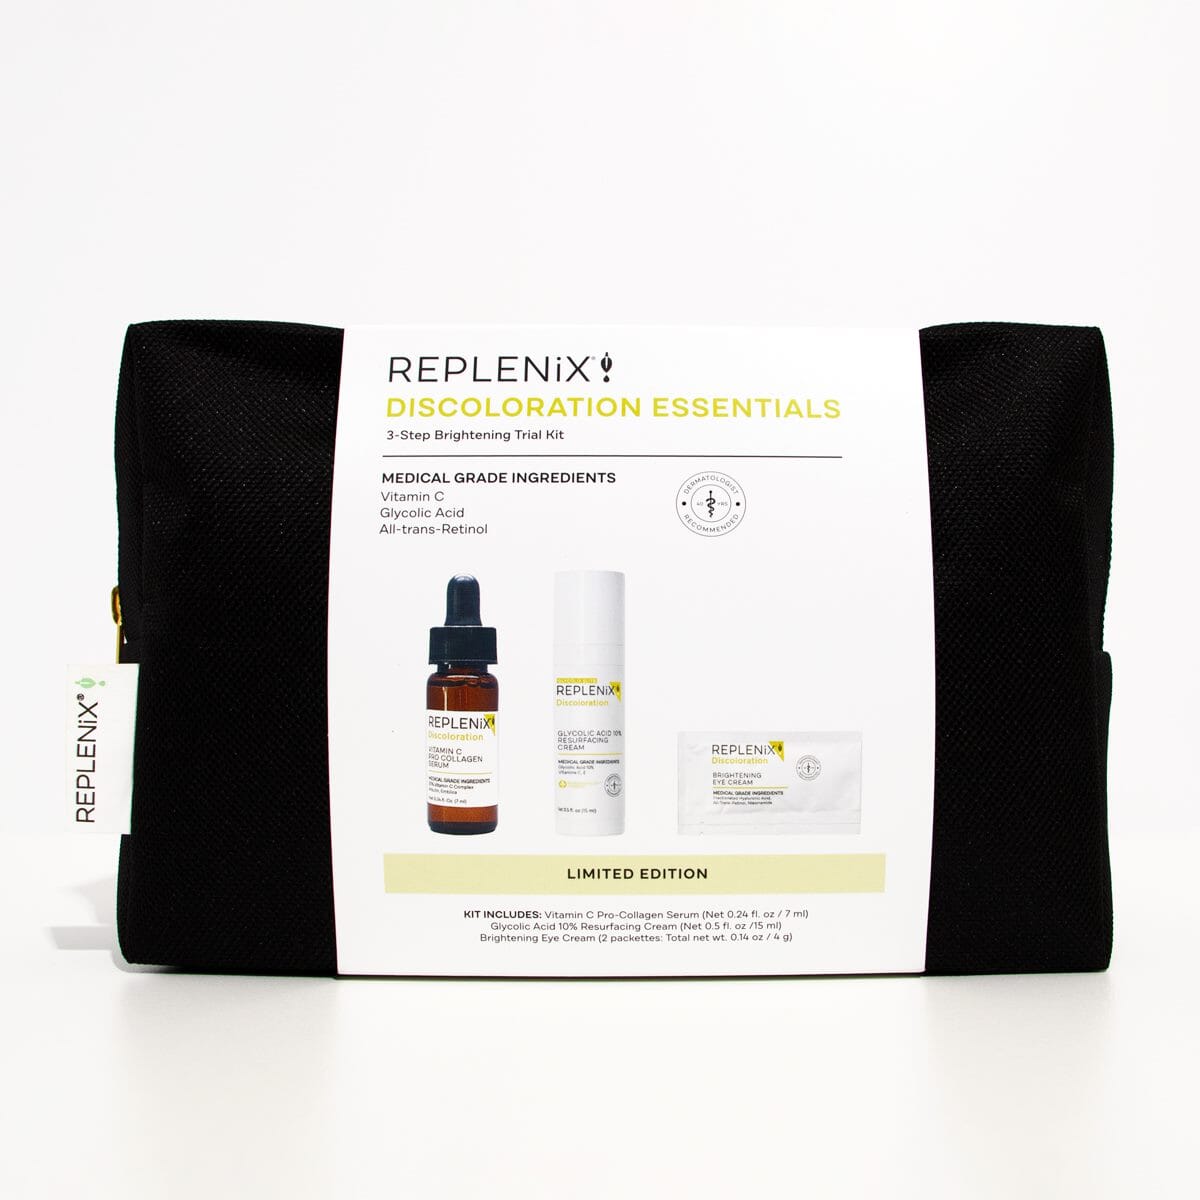 Replenix Discoloration Essentials 3 Step Brightening Trial Kit Replenix Shop at Exclusive Beauty Club